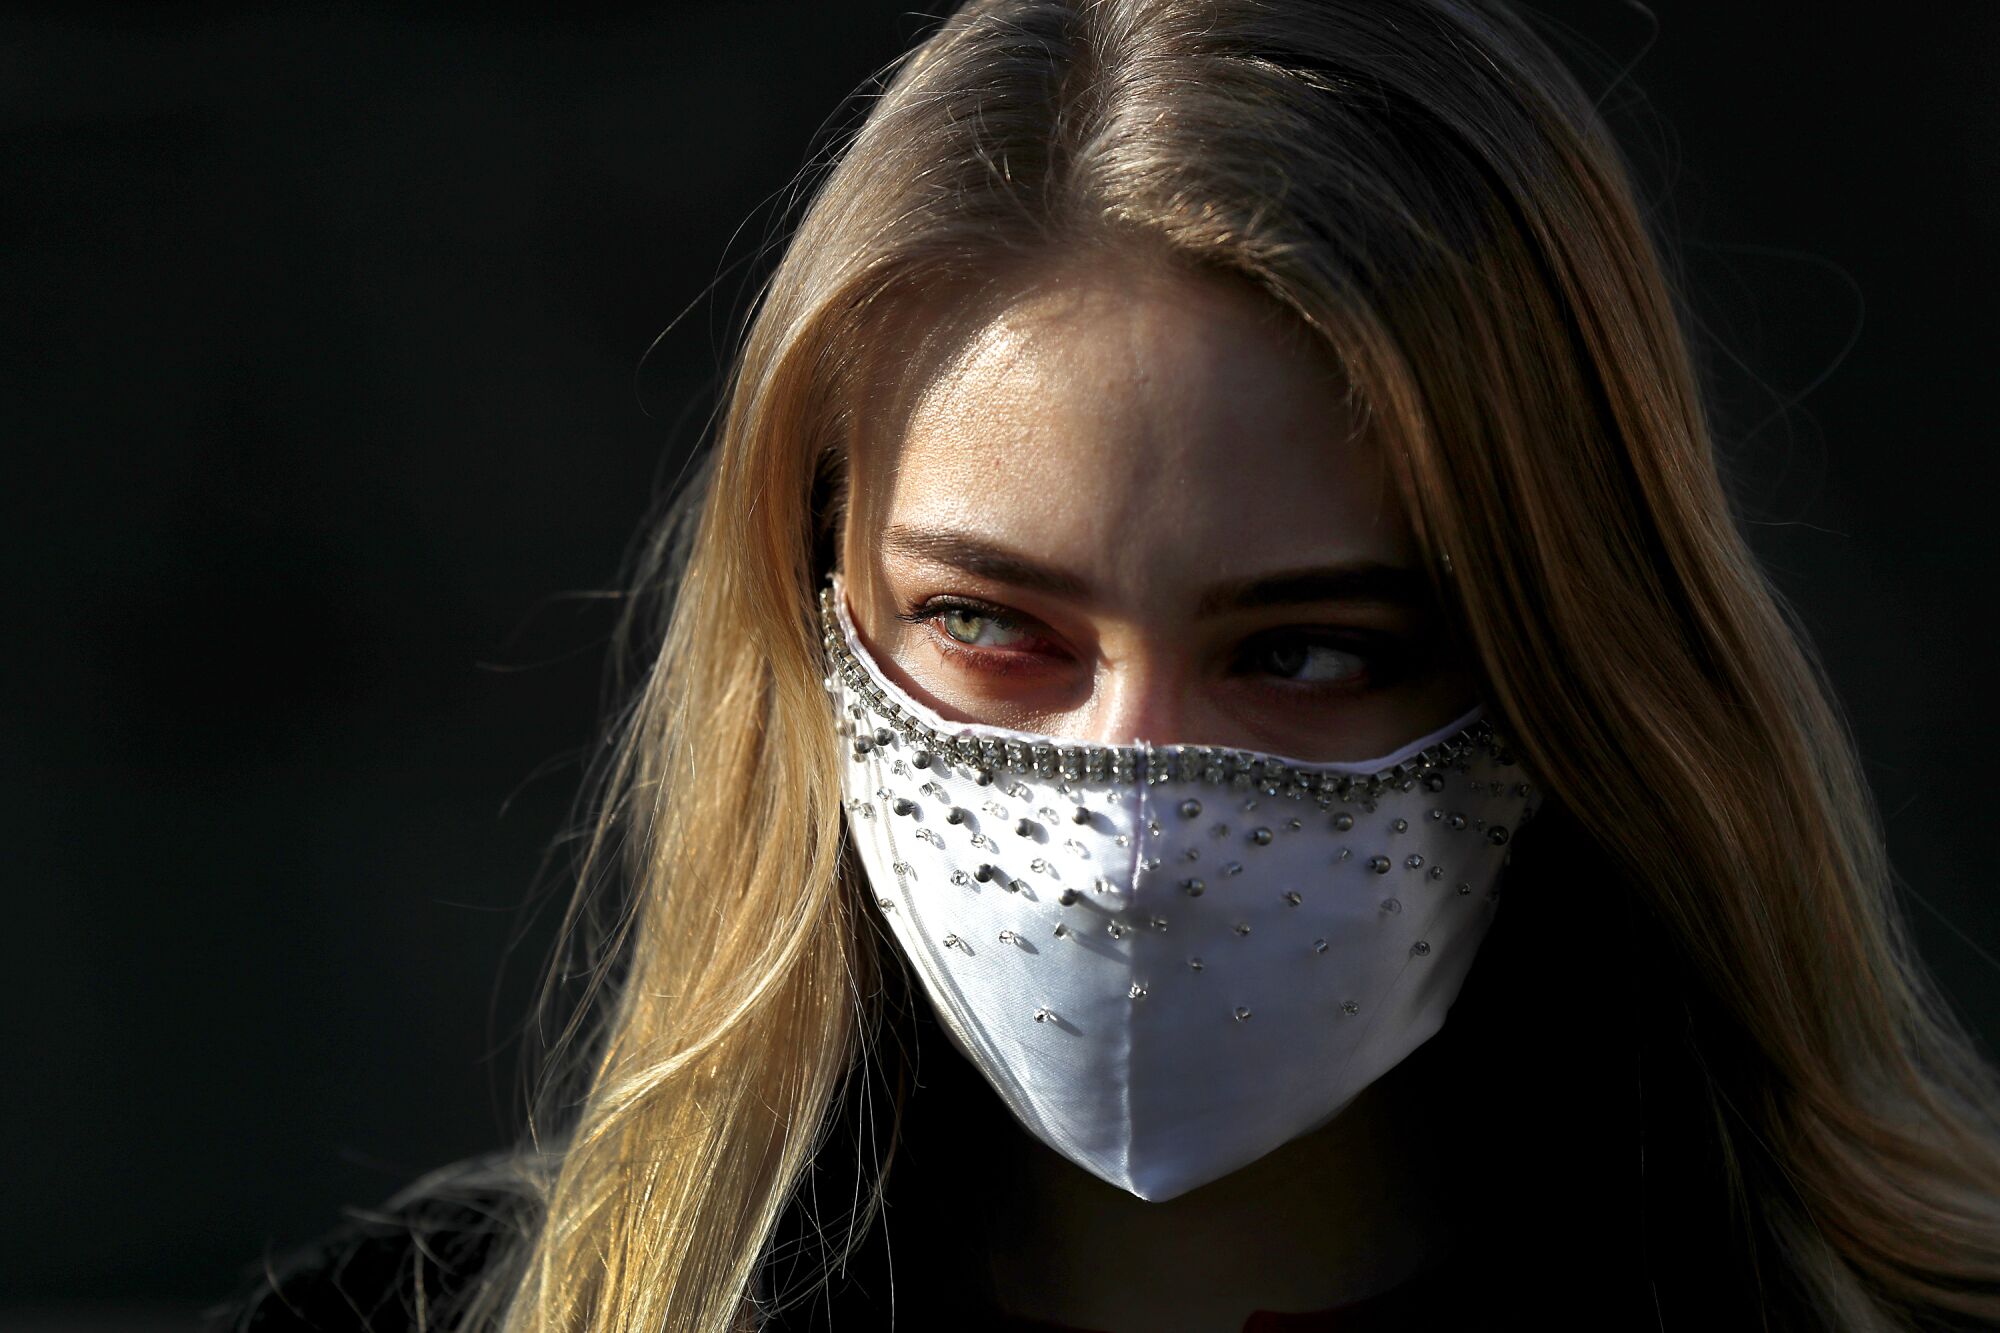 CZECH REPUBLIC: A woman wears a bedazzled face mask in downtown Prague.